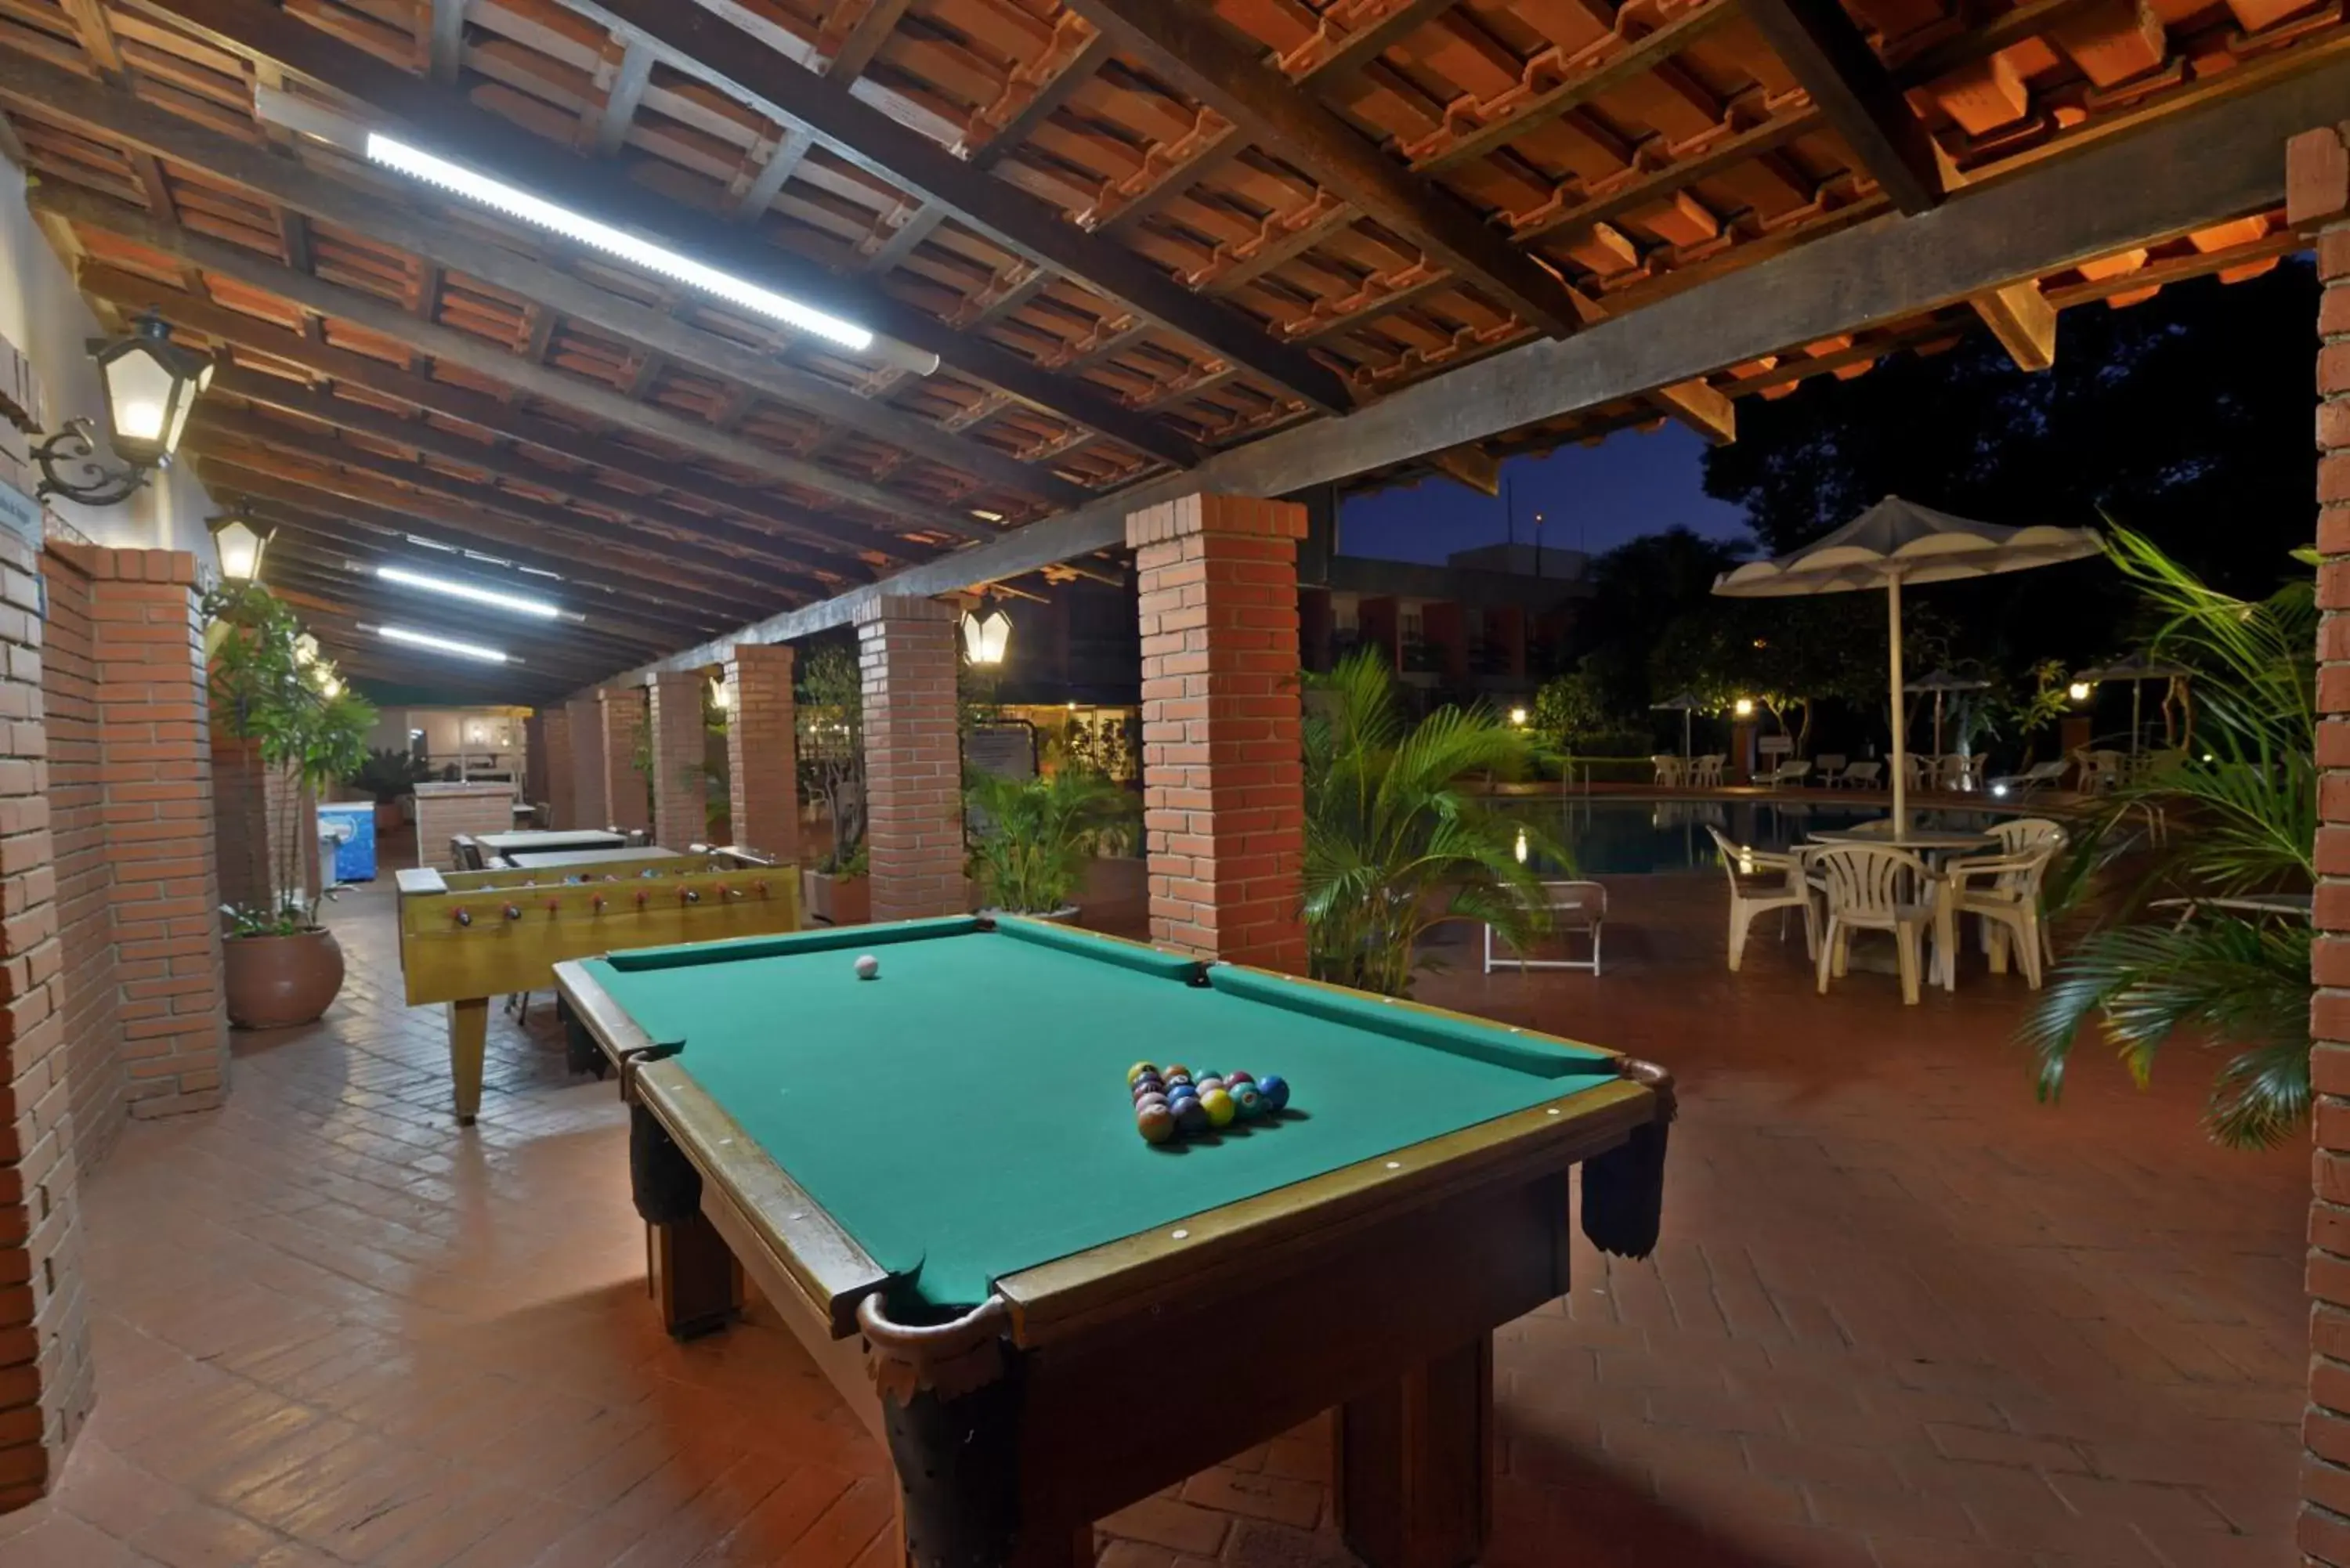 Game Room, Billiards in Hotel Deville Express Guaira